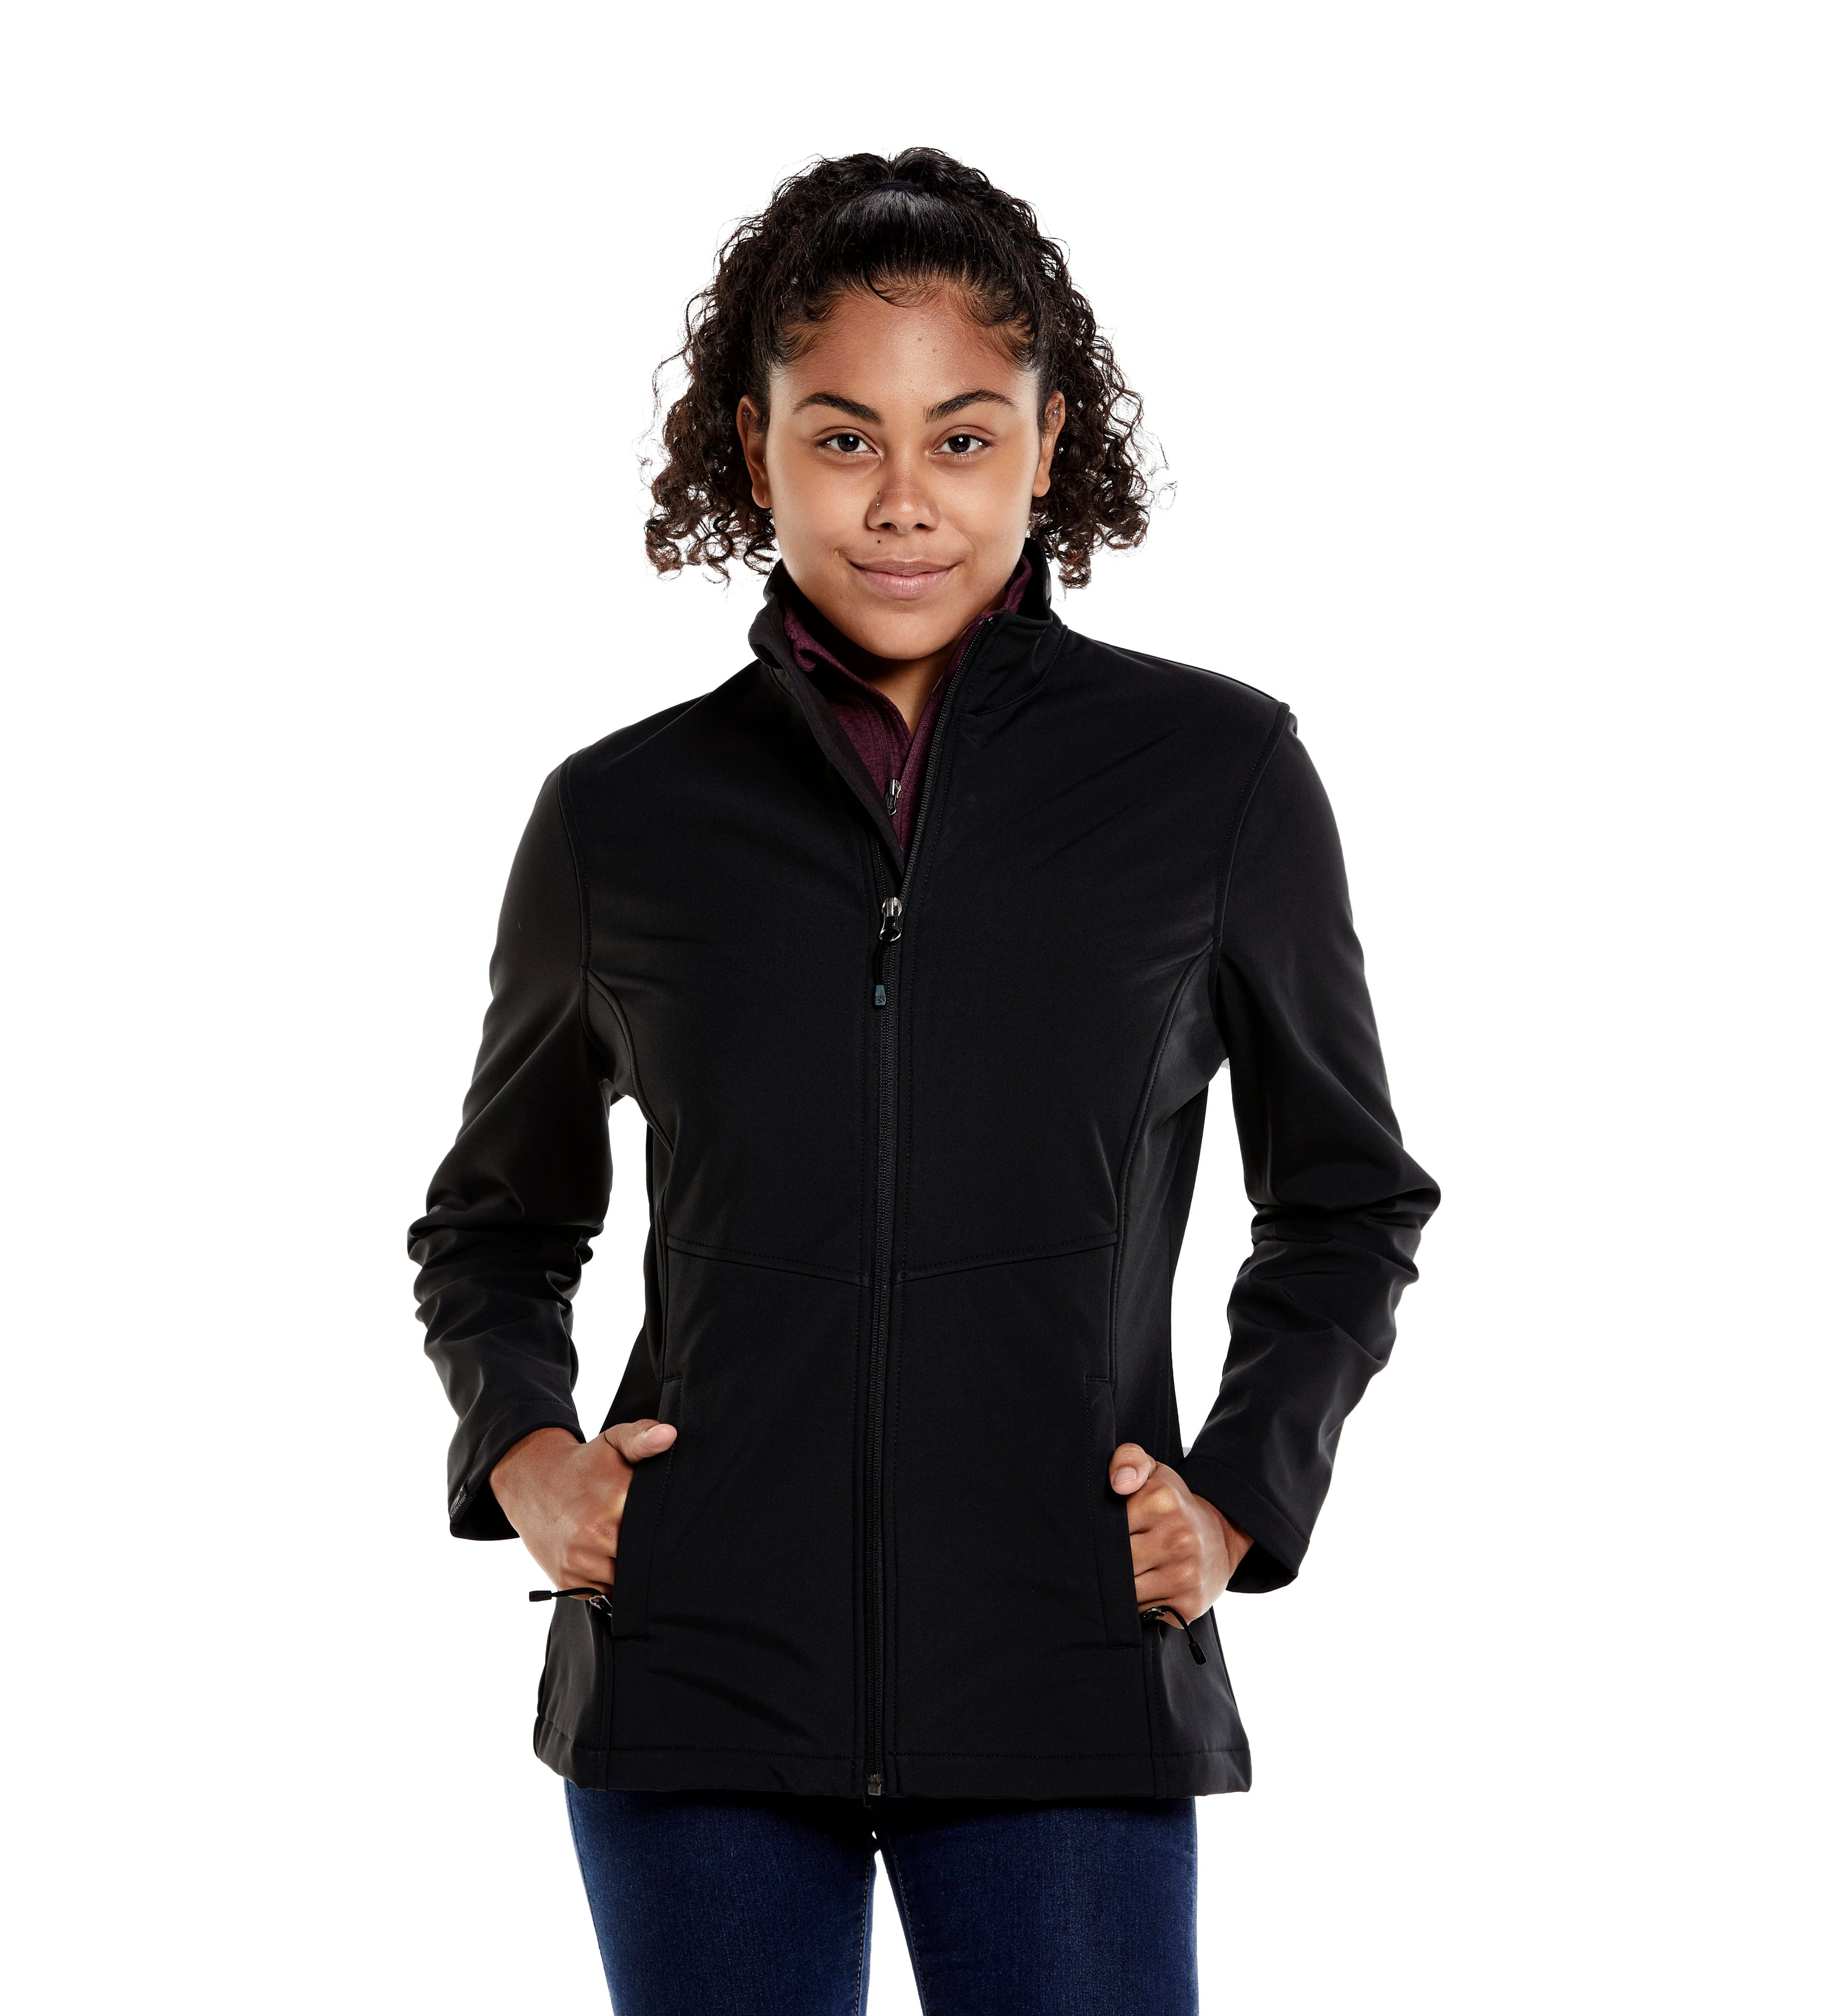 Buy GIMECEN Women's Lightweight Full Zip Soft Polar Fleece Jacket Outdoor  Recreation Coat With Zipper Pockets, Women-beige05, Small at